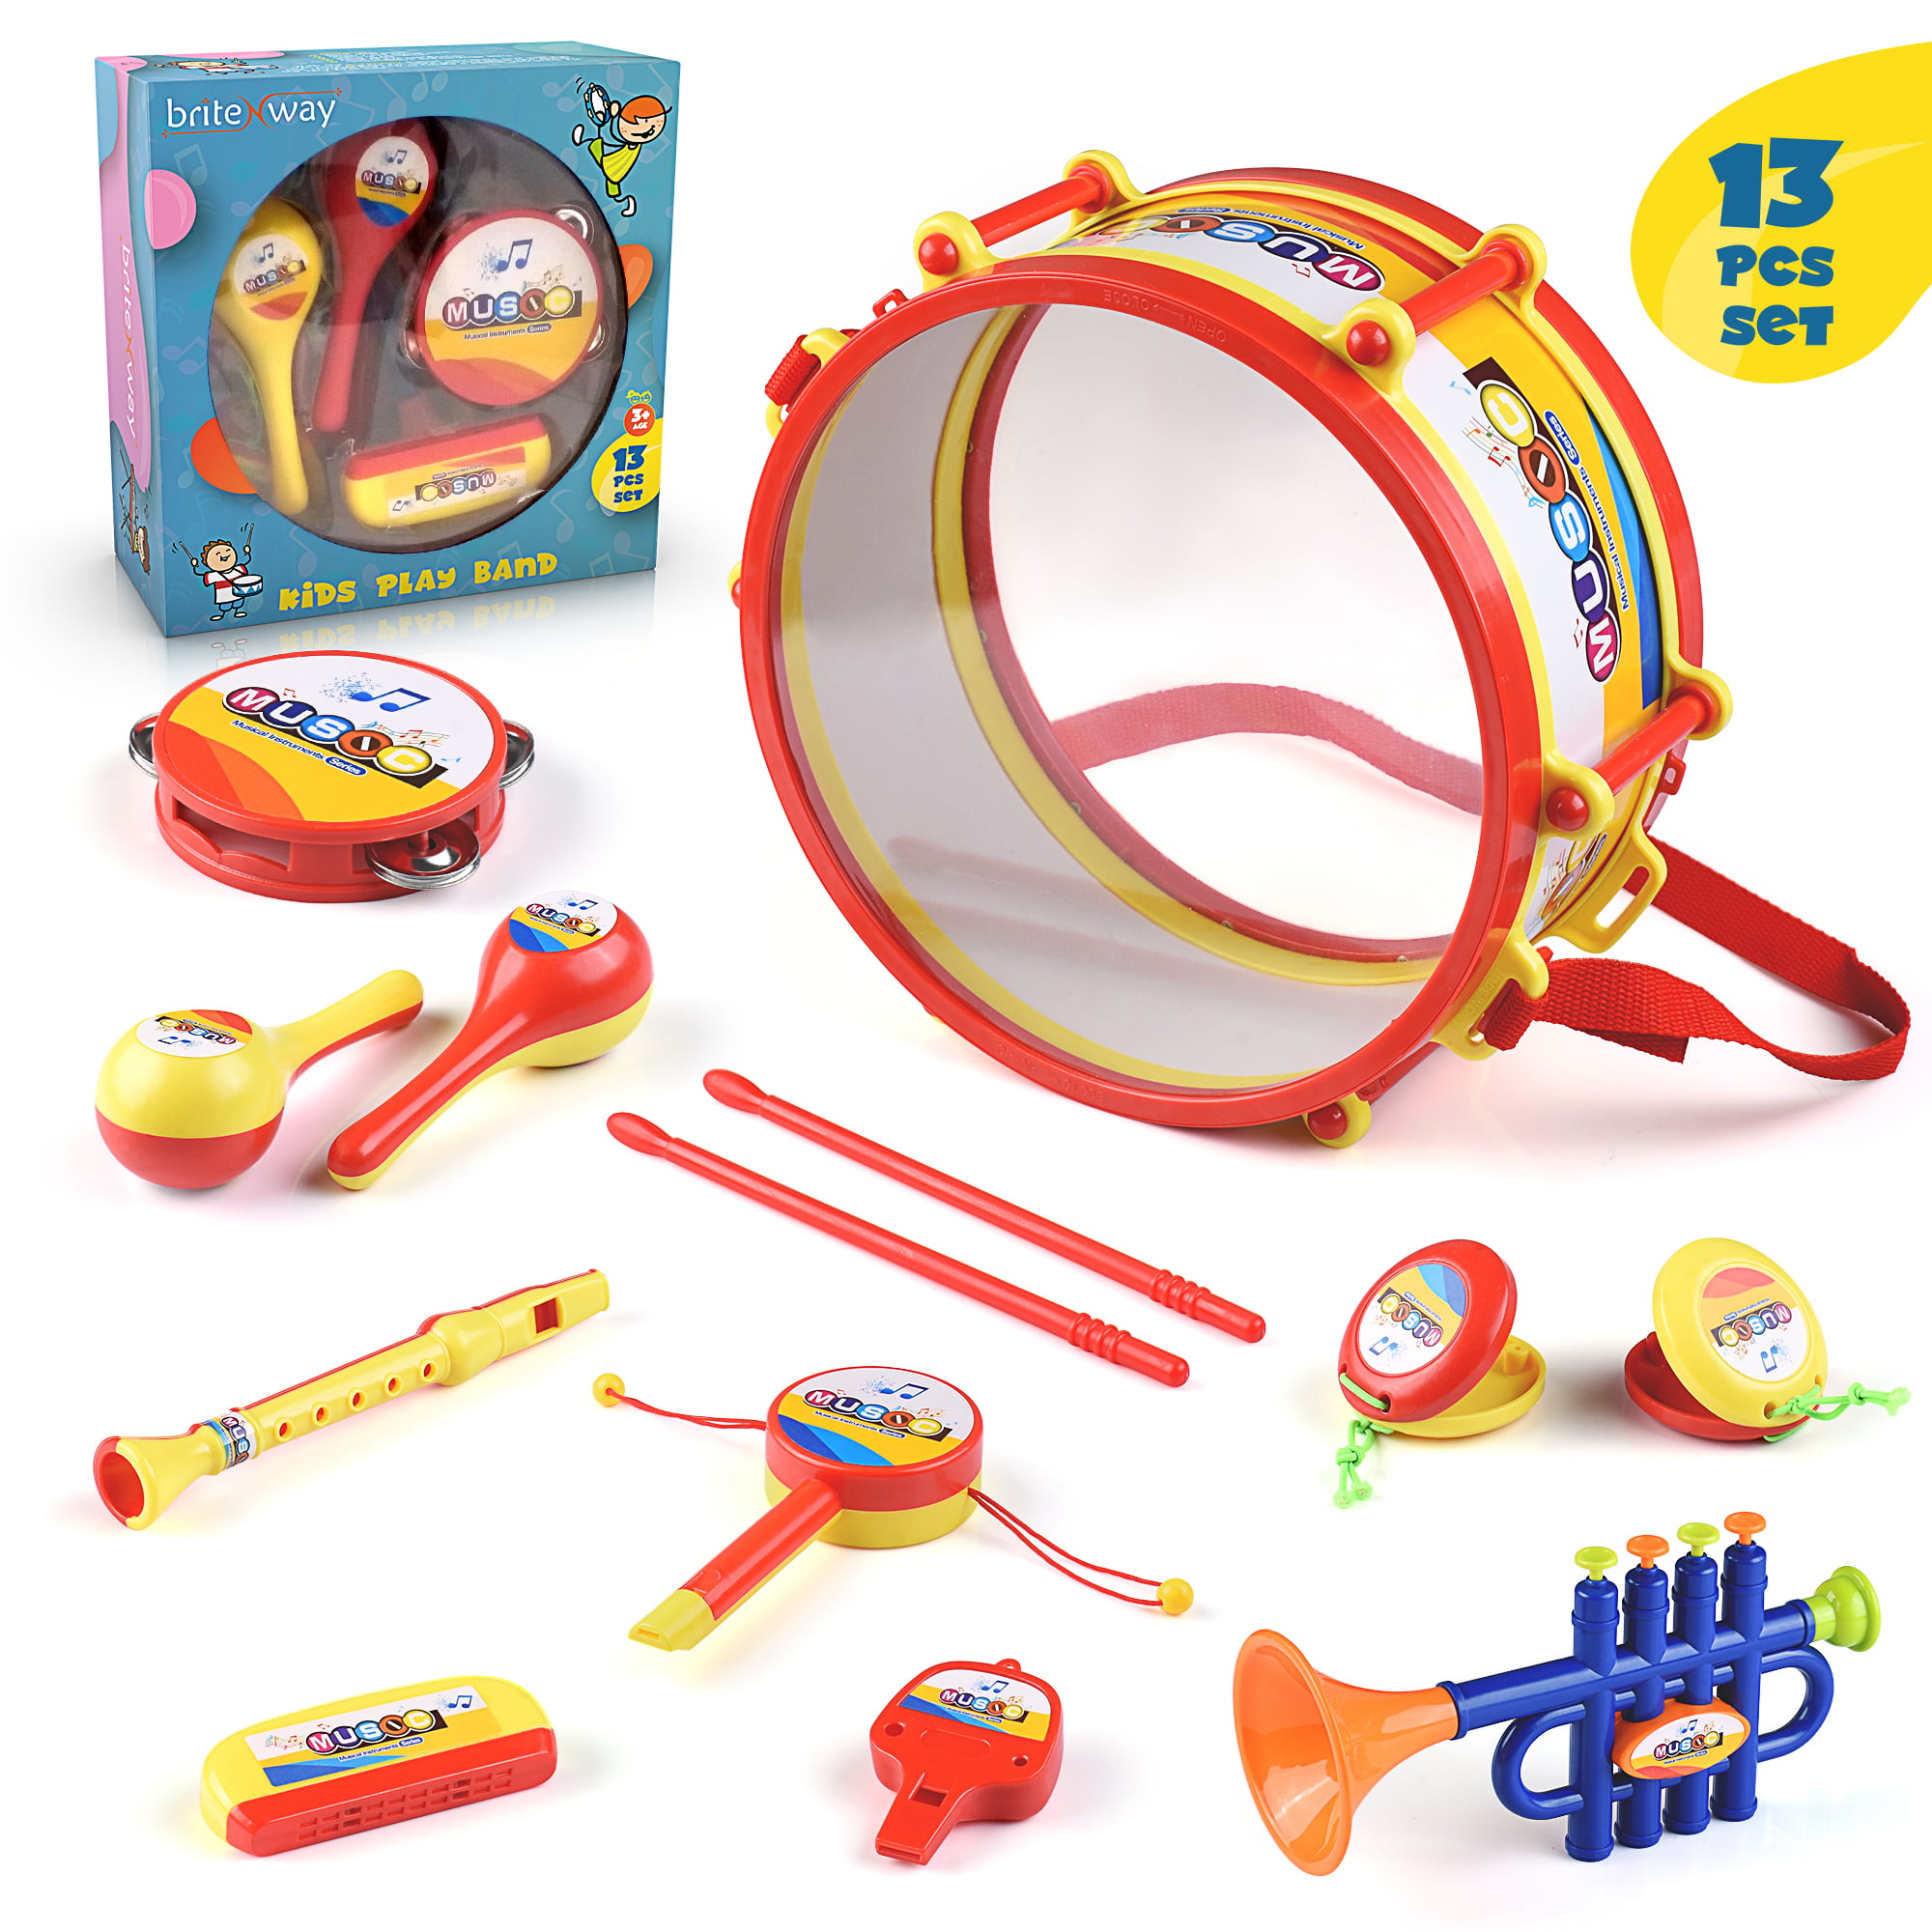 Hape Mini Band Set Five Music Instruments for Kids